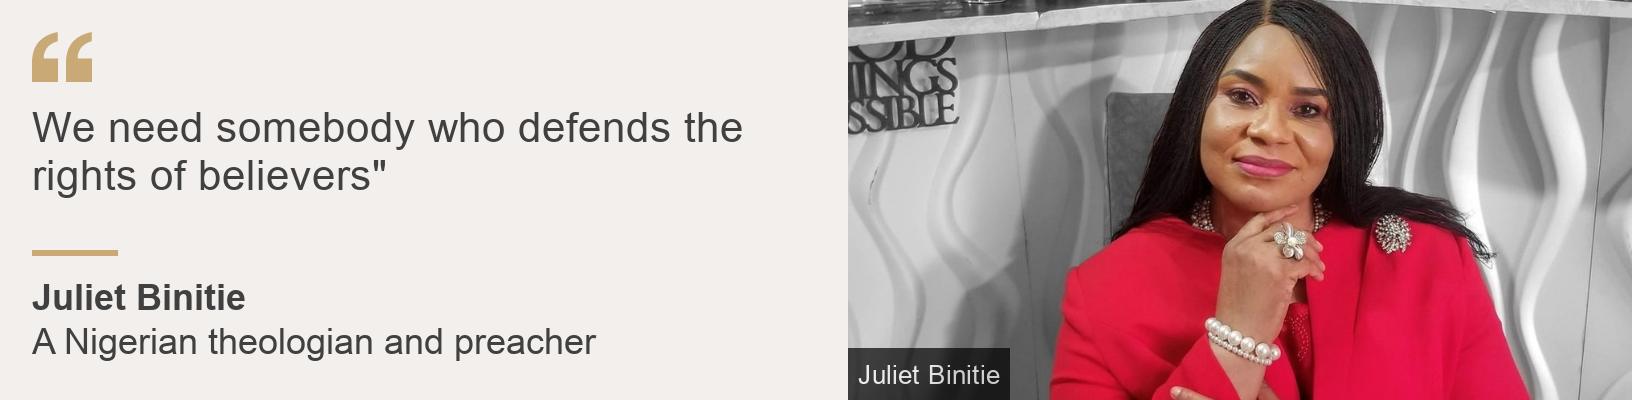 "We need somebody who defends the rights of believers"", Source: Juliet Binitie, Source description: A Nigerian theologian and preacher, Image: Juliet Binitie